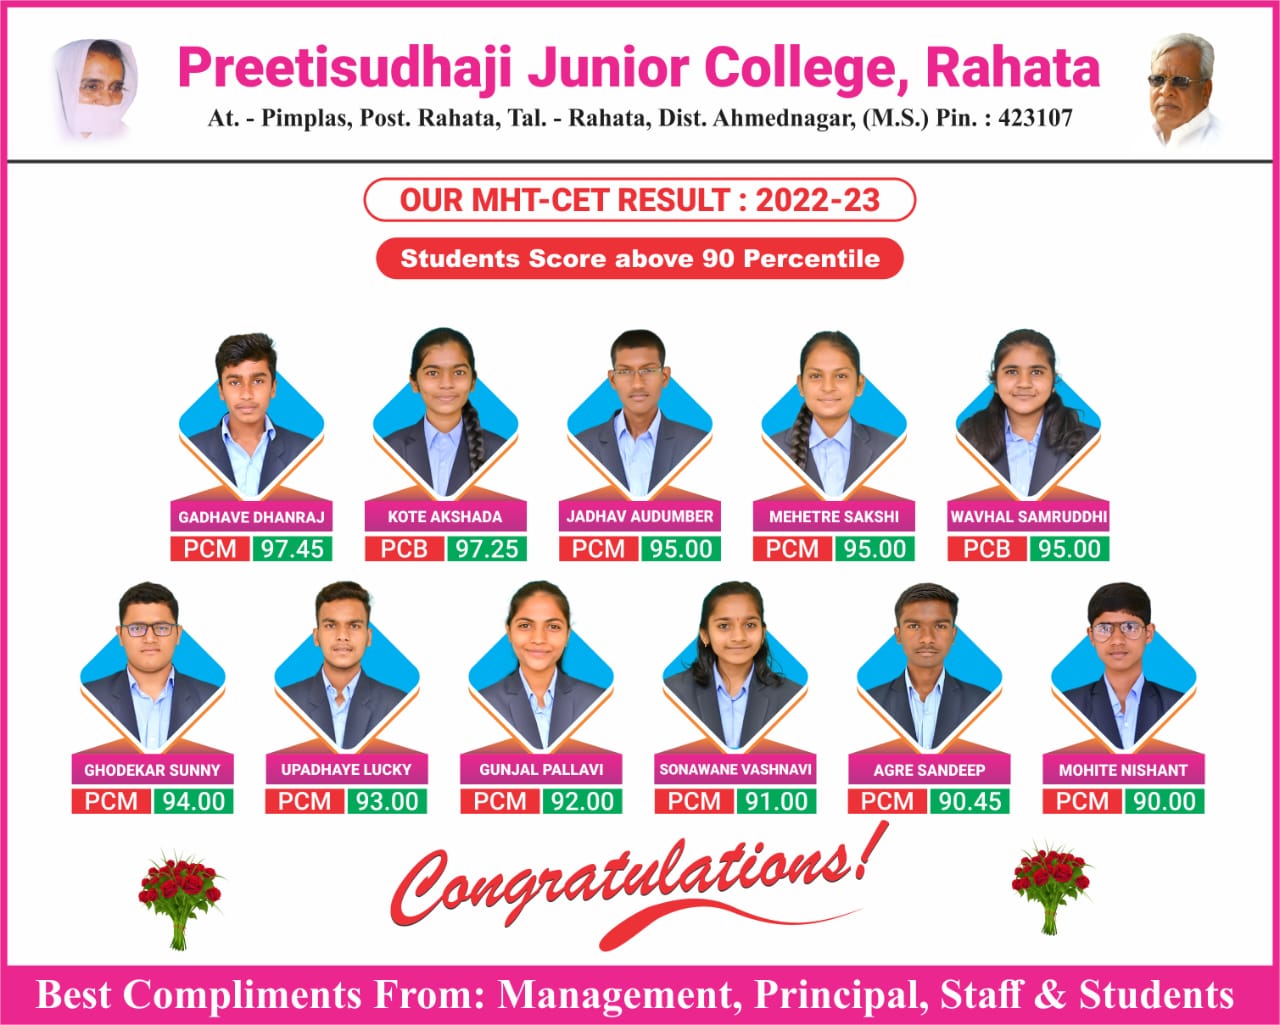 preetisudhaji junior college mht-cet result 2023